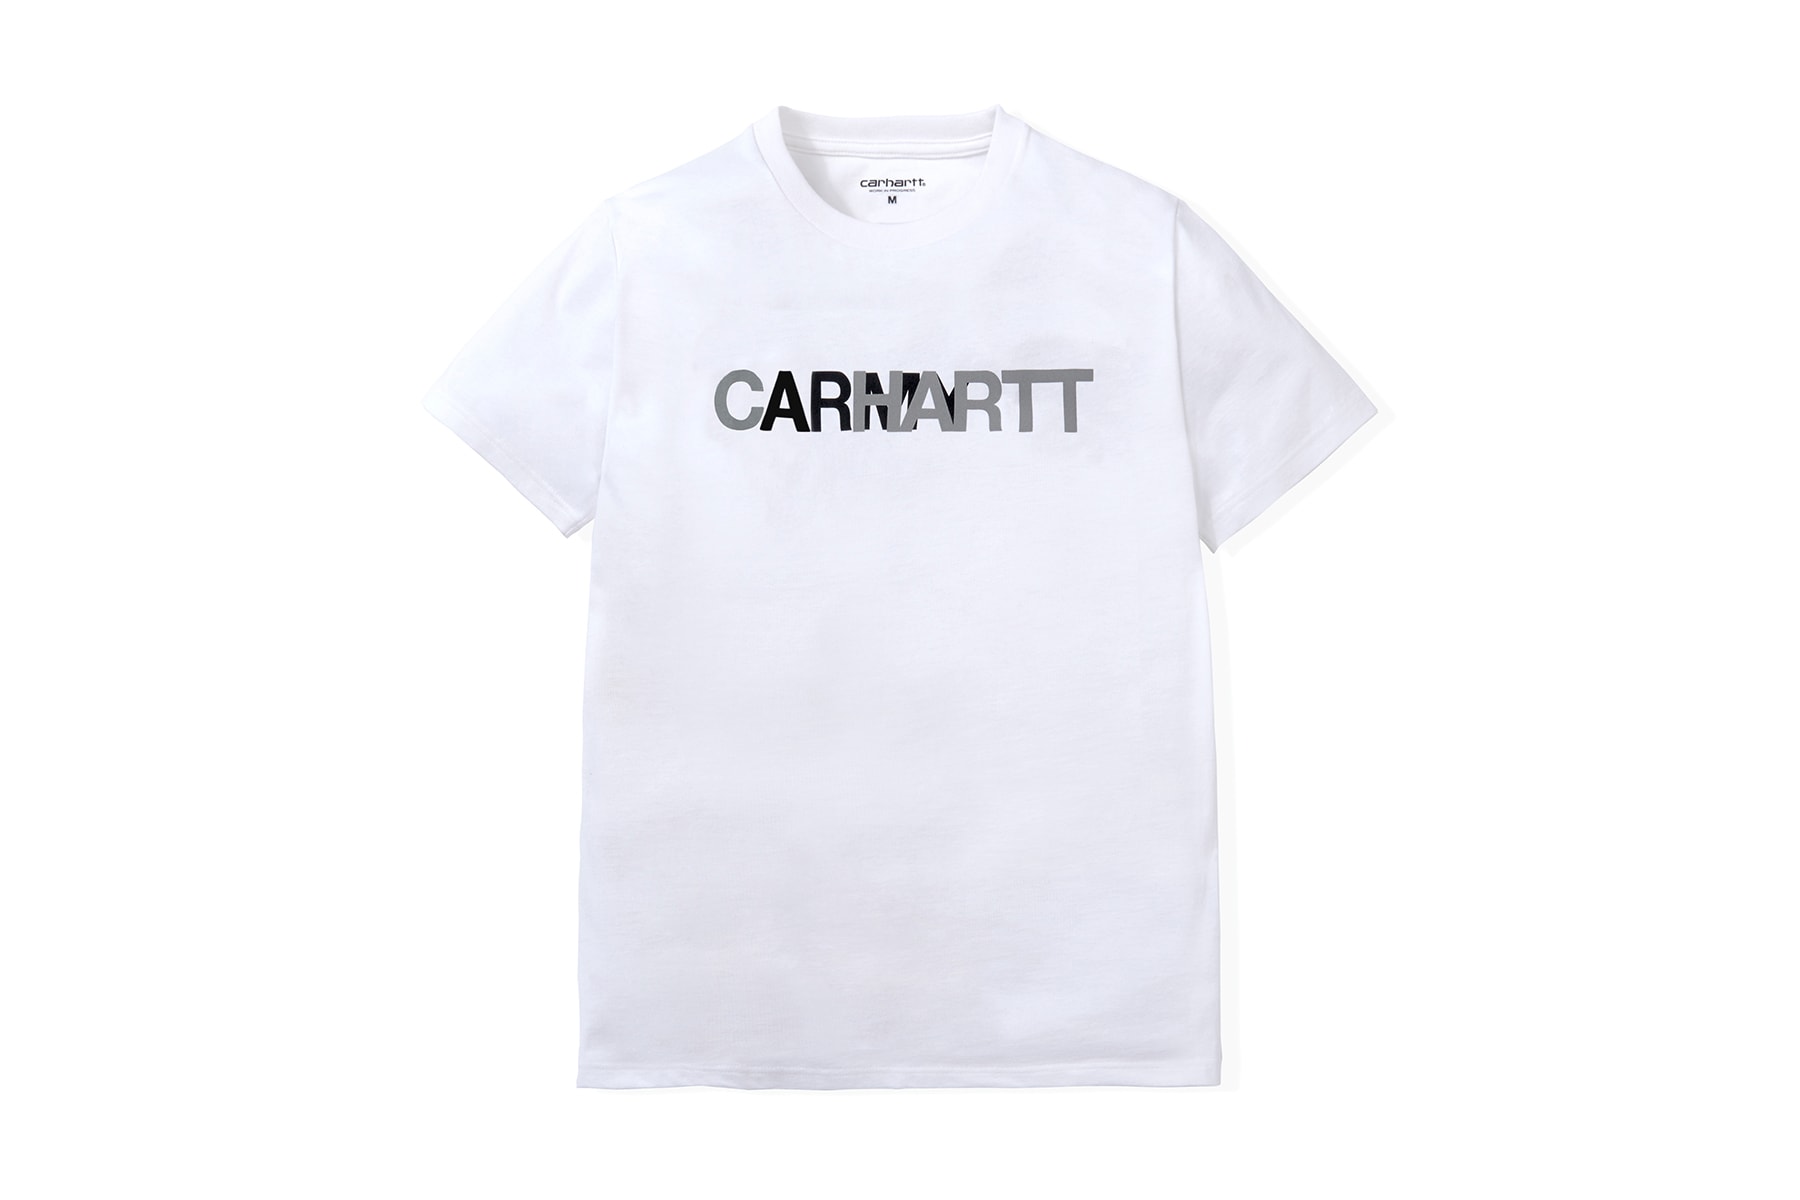 Carhartt WIP x mo’design inc 聯名「CARHARTT MODES」系列完整單品一覽